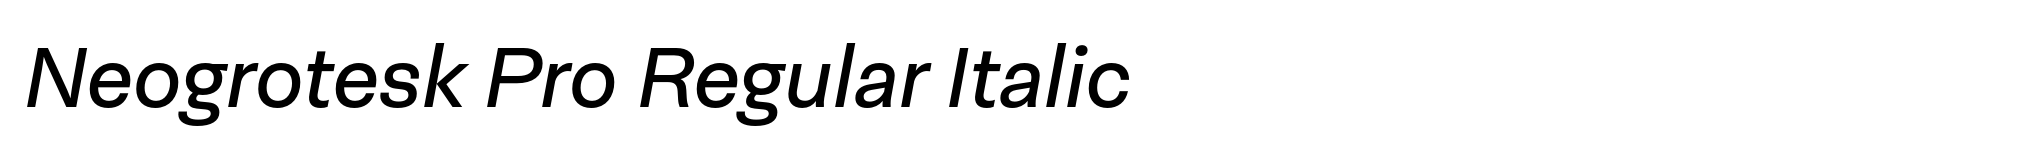 Neogrotesk Pro Regular Italic image